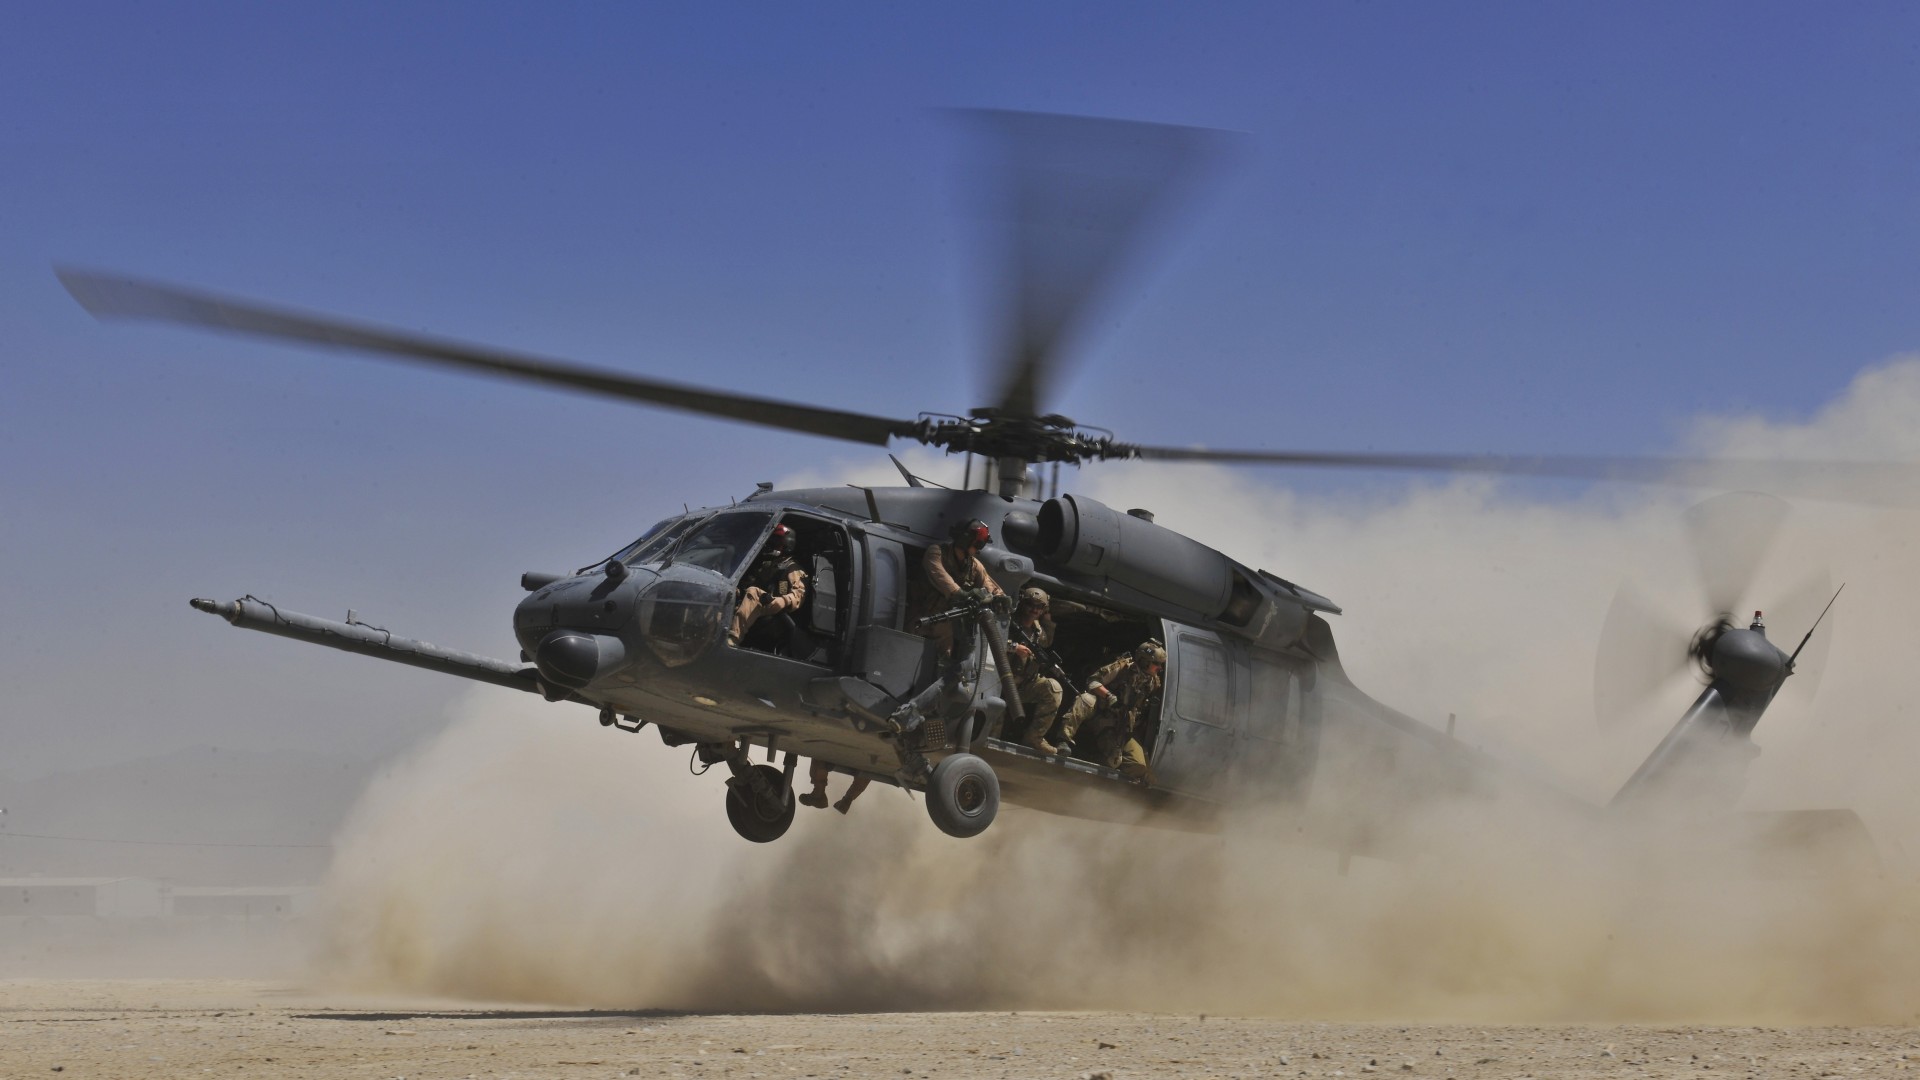 Сикорский, многоцелевой вертолёт, Армия США, MH-60G, Sikorsky, HH-60G, Pave Hawk, combat search, rescue helicopter, MEDEVAC, USA Army, landing, dust (horizontal)